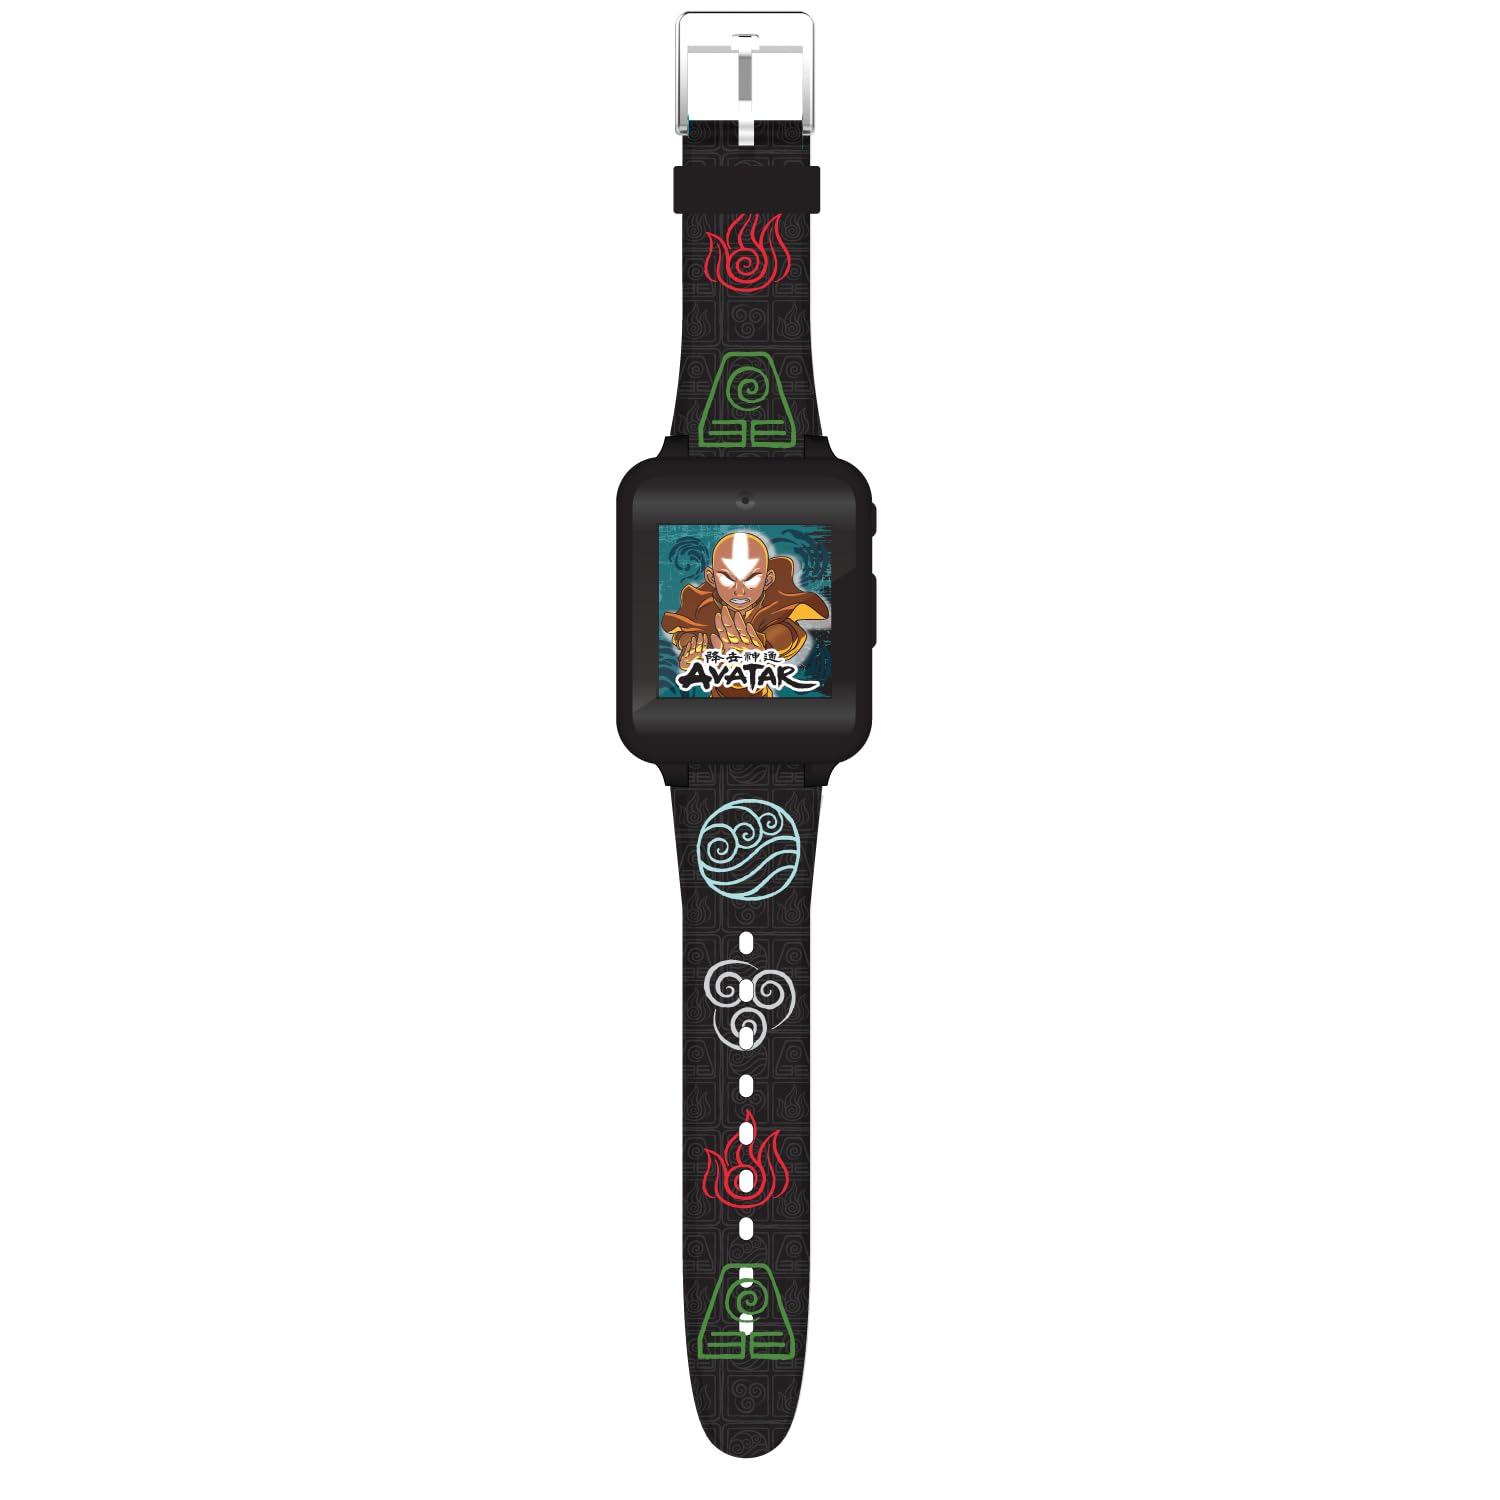 Accutime Kids Avatar Black Educational Learning Touchscreen Smart Watch Toy for Boys, Girls, Unisex - Selfie Cam, Alarm, Calculator & More (Model: AVT4003AZ)